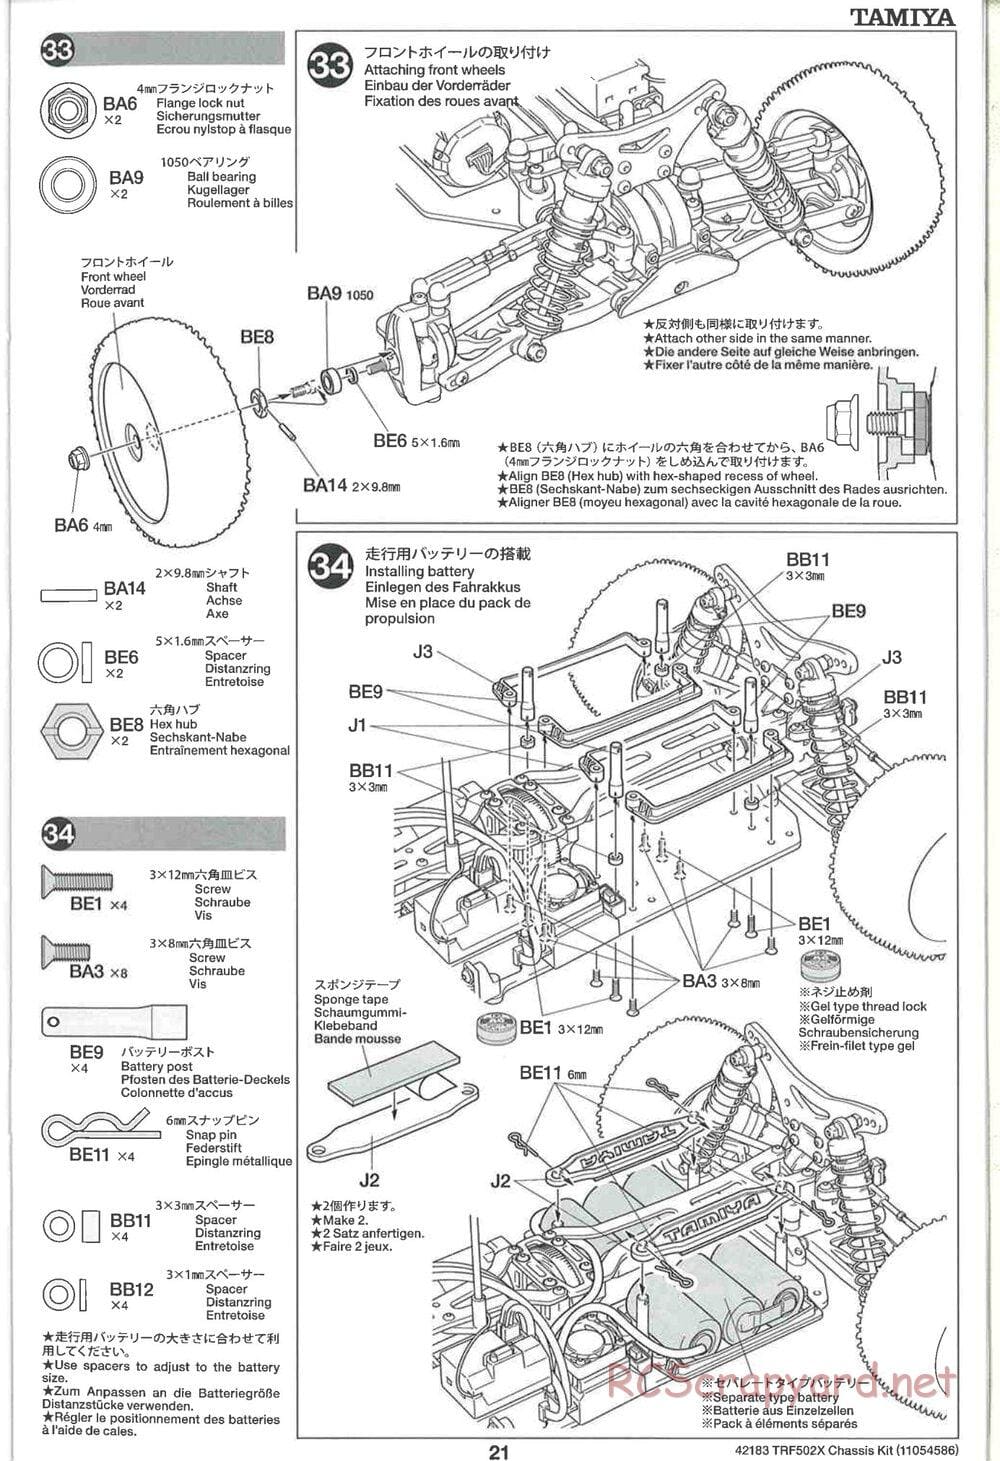 Tamiya - TRF502X Chassis - Manual - Page 21